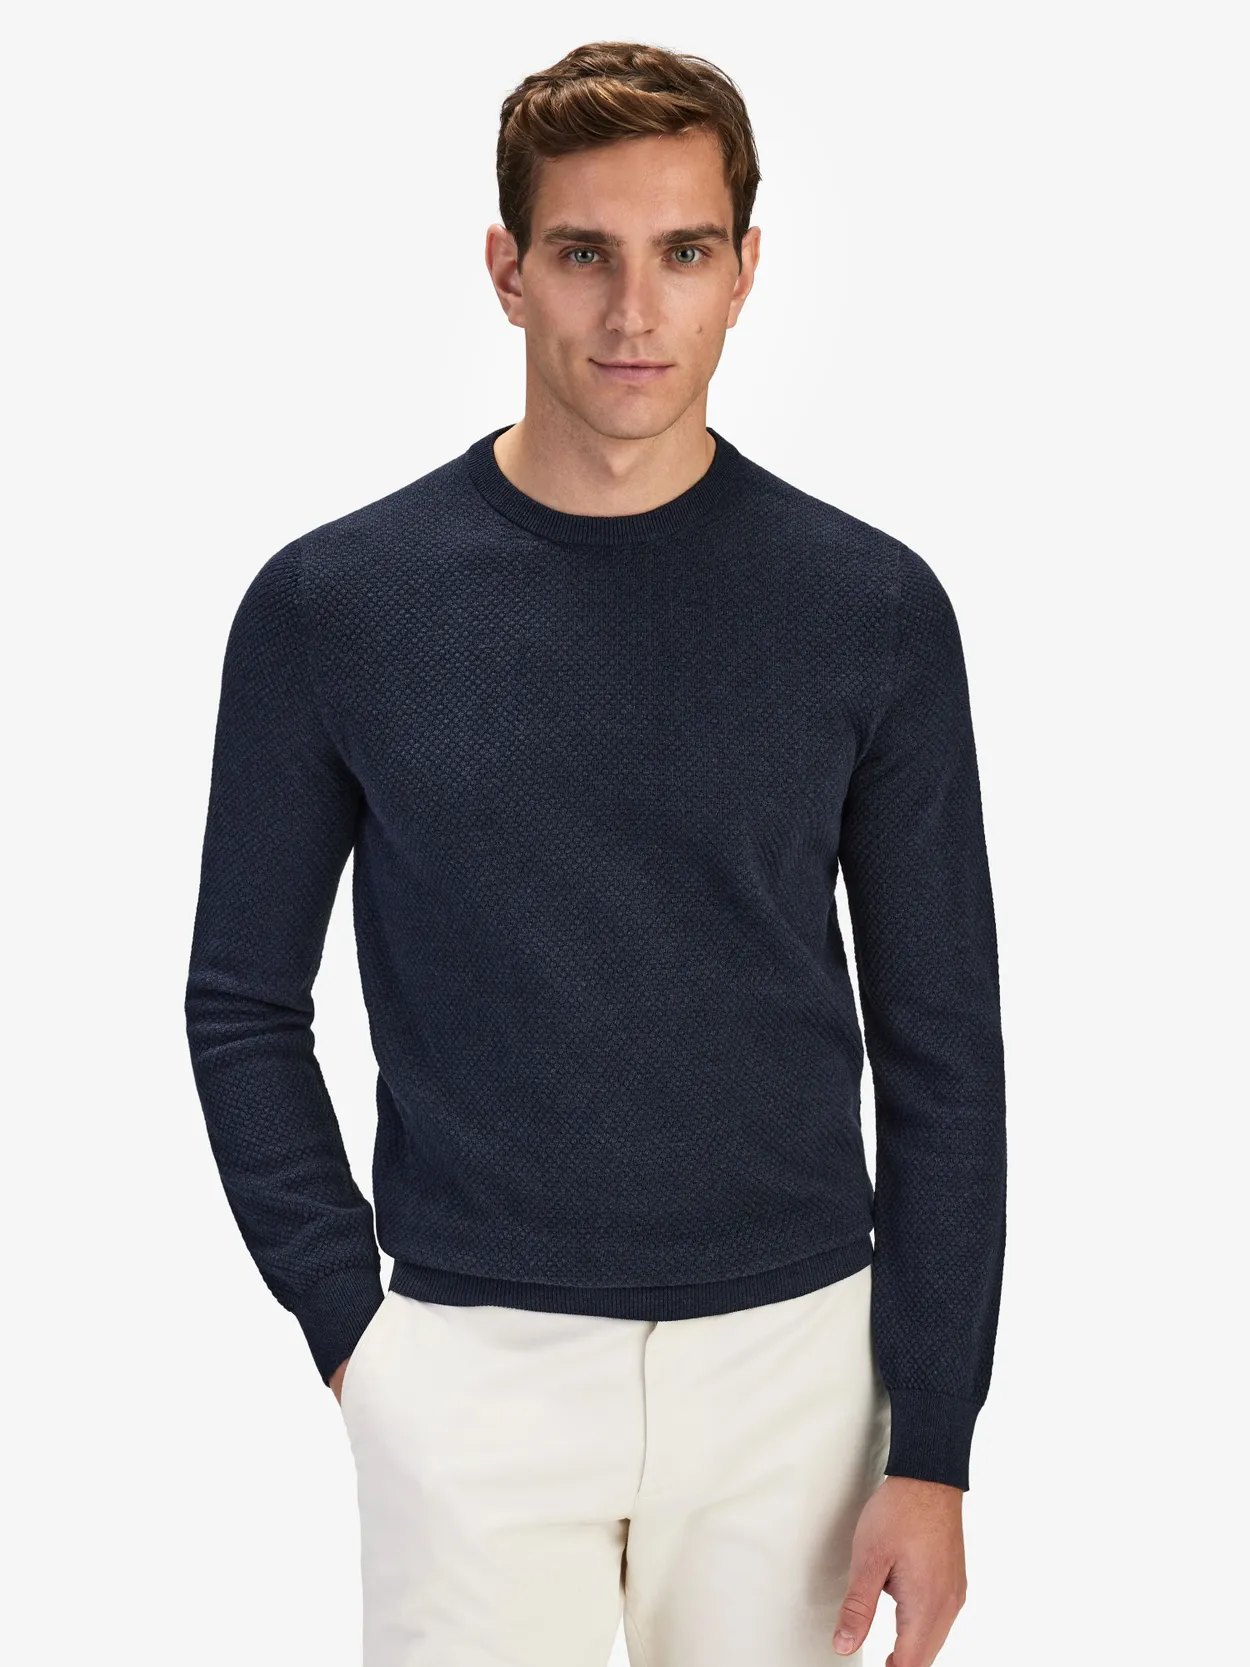 Navy Blue Cotton Sweater